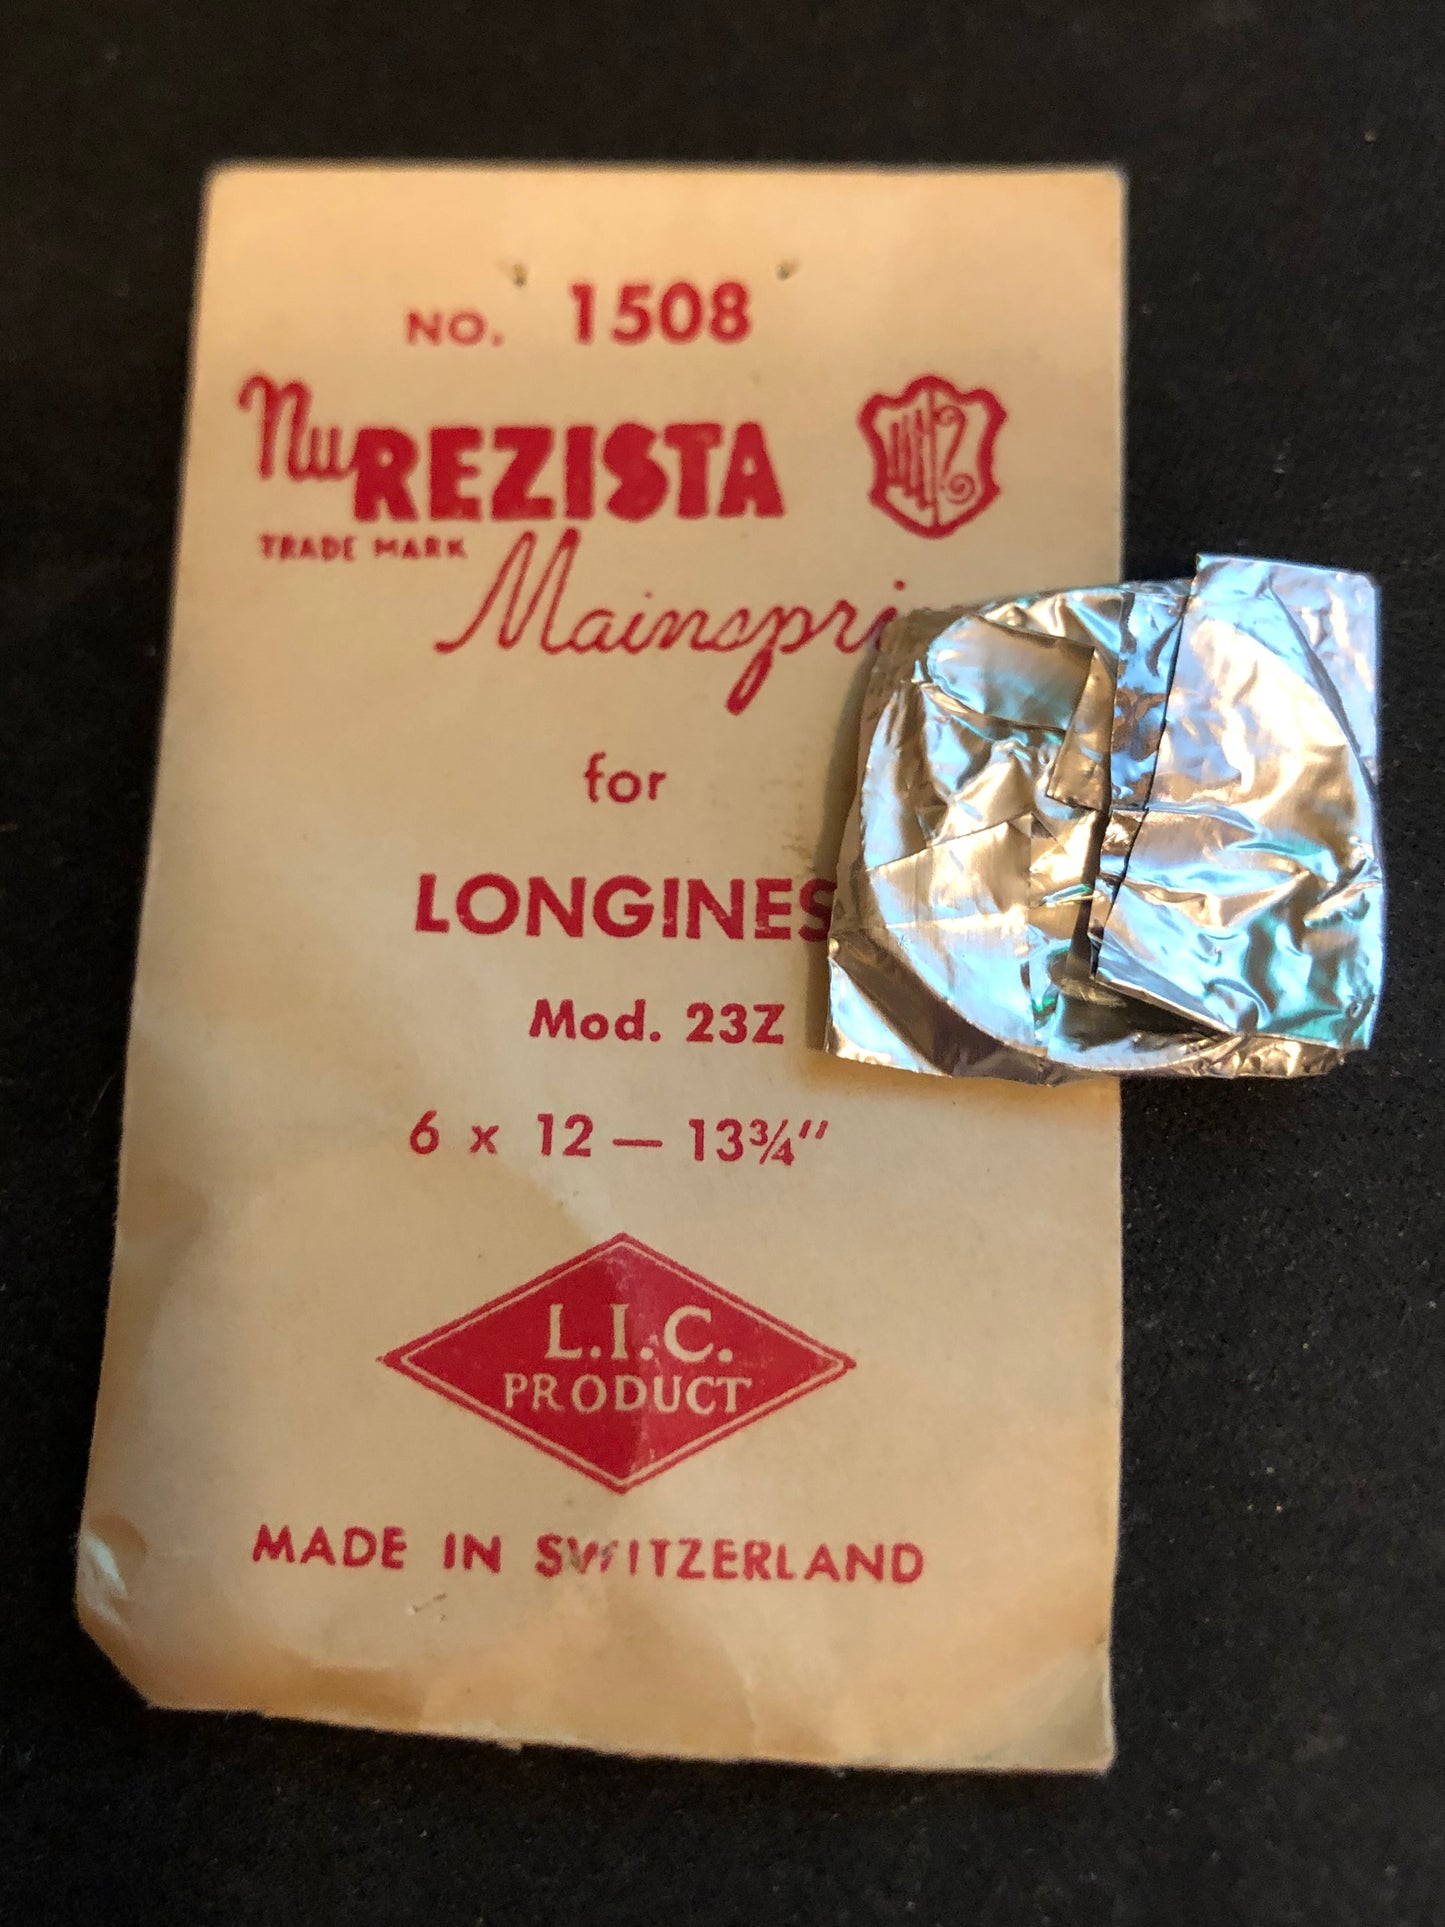 NuREZISTA Mainspring #1508 for Longines caliber 23Z - Steel